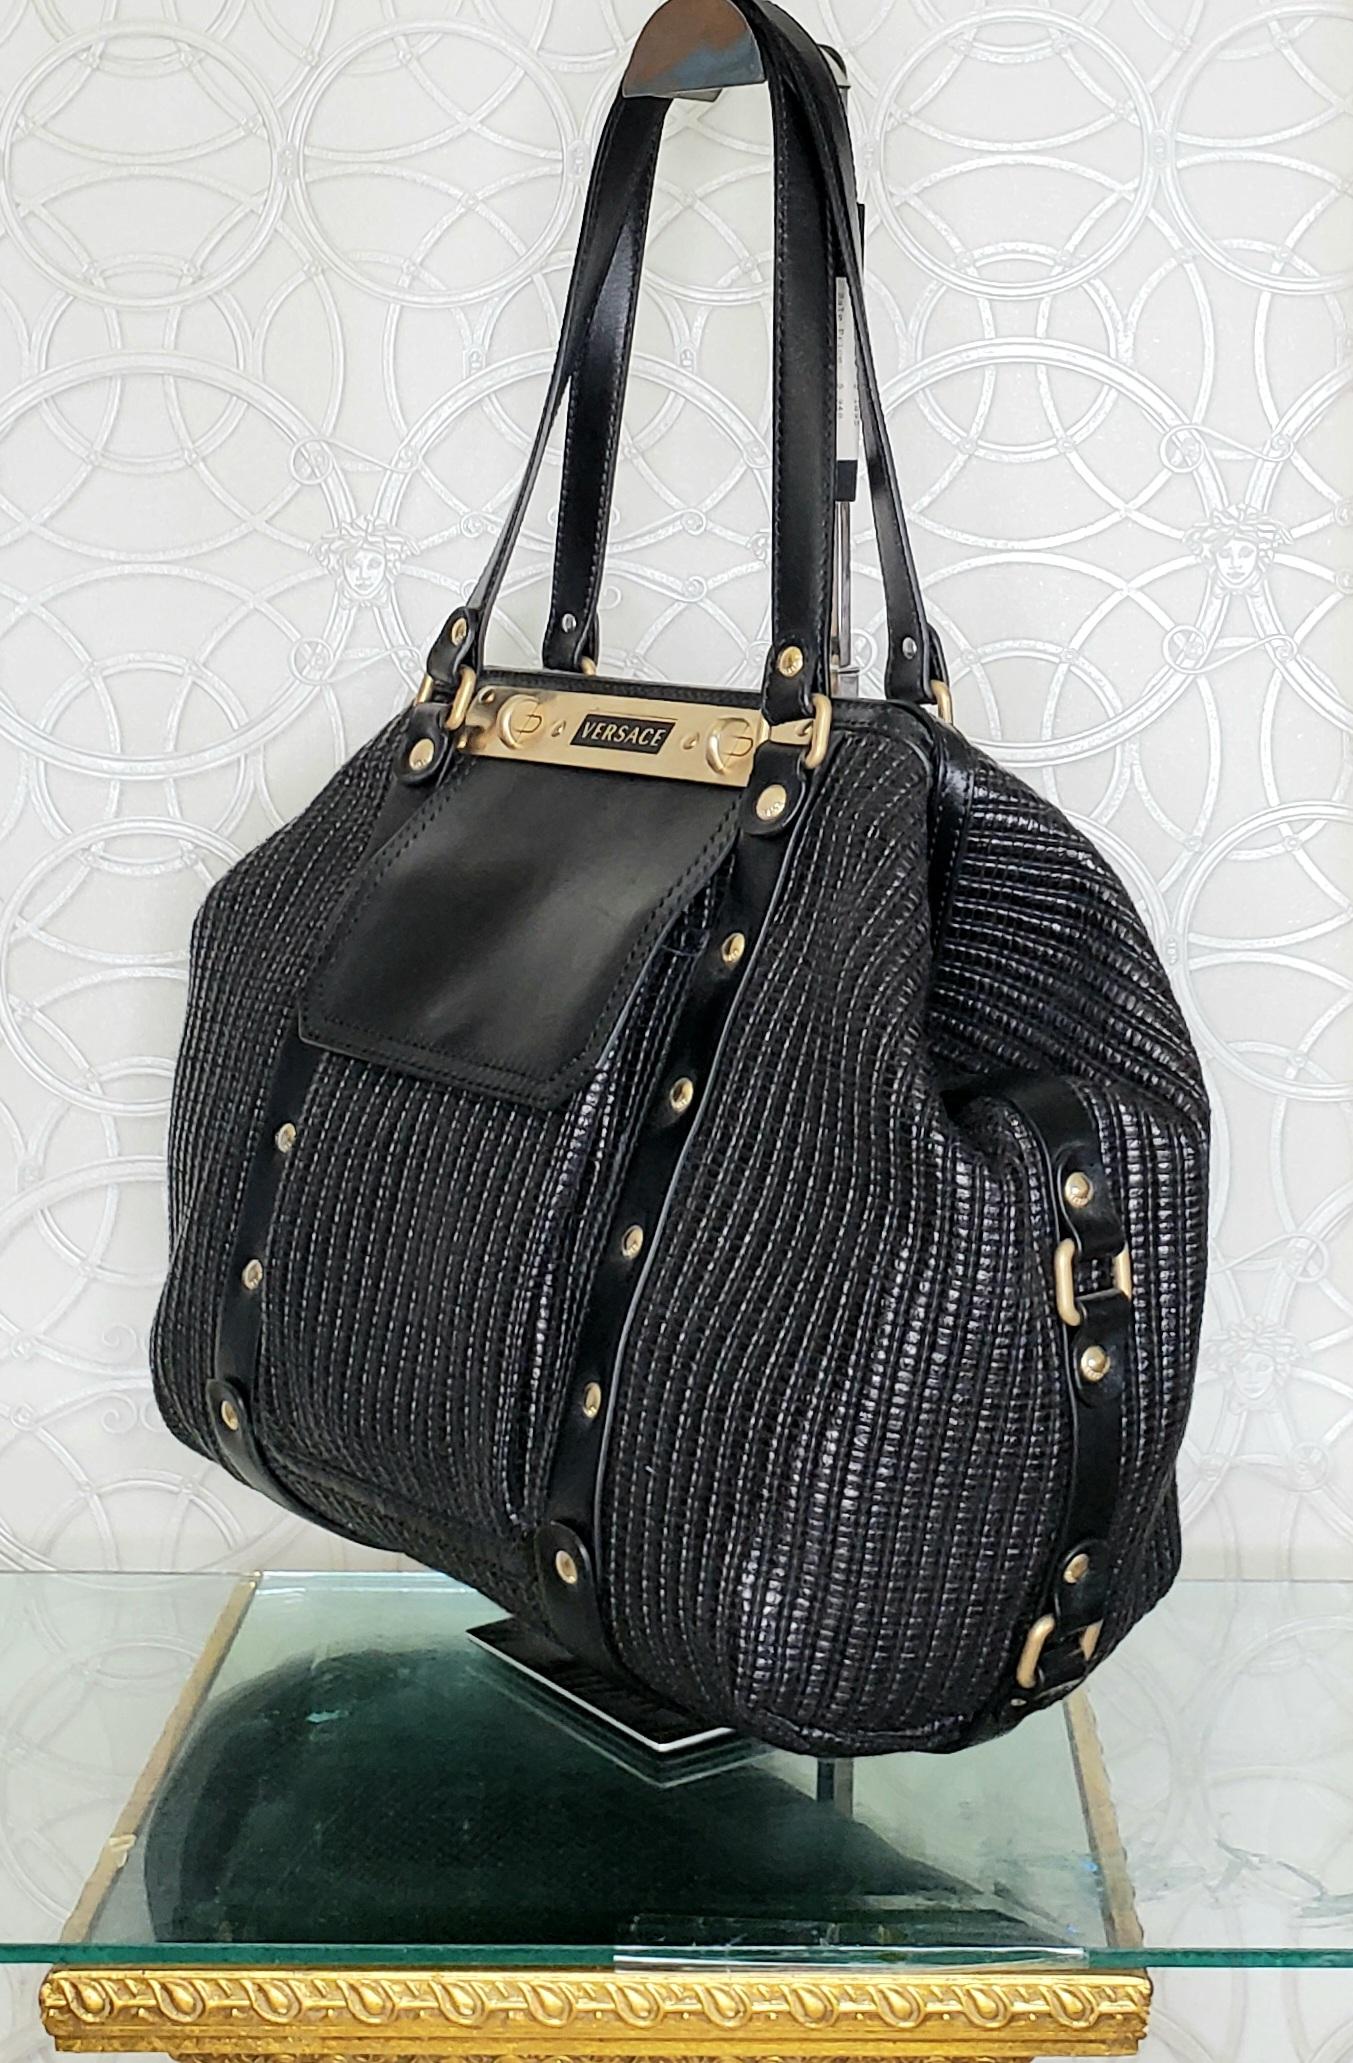 versace black handbag with gold hardware